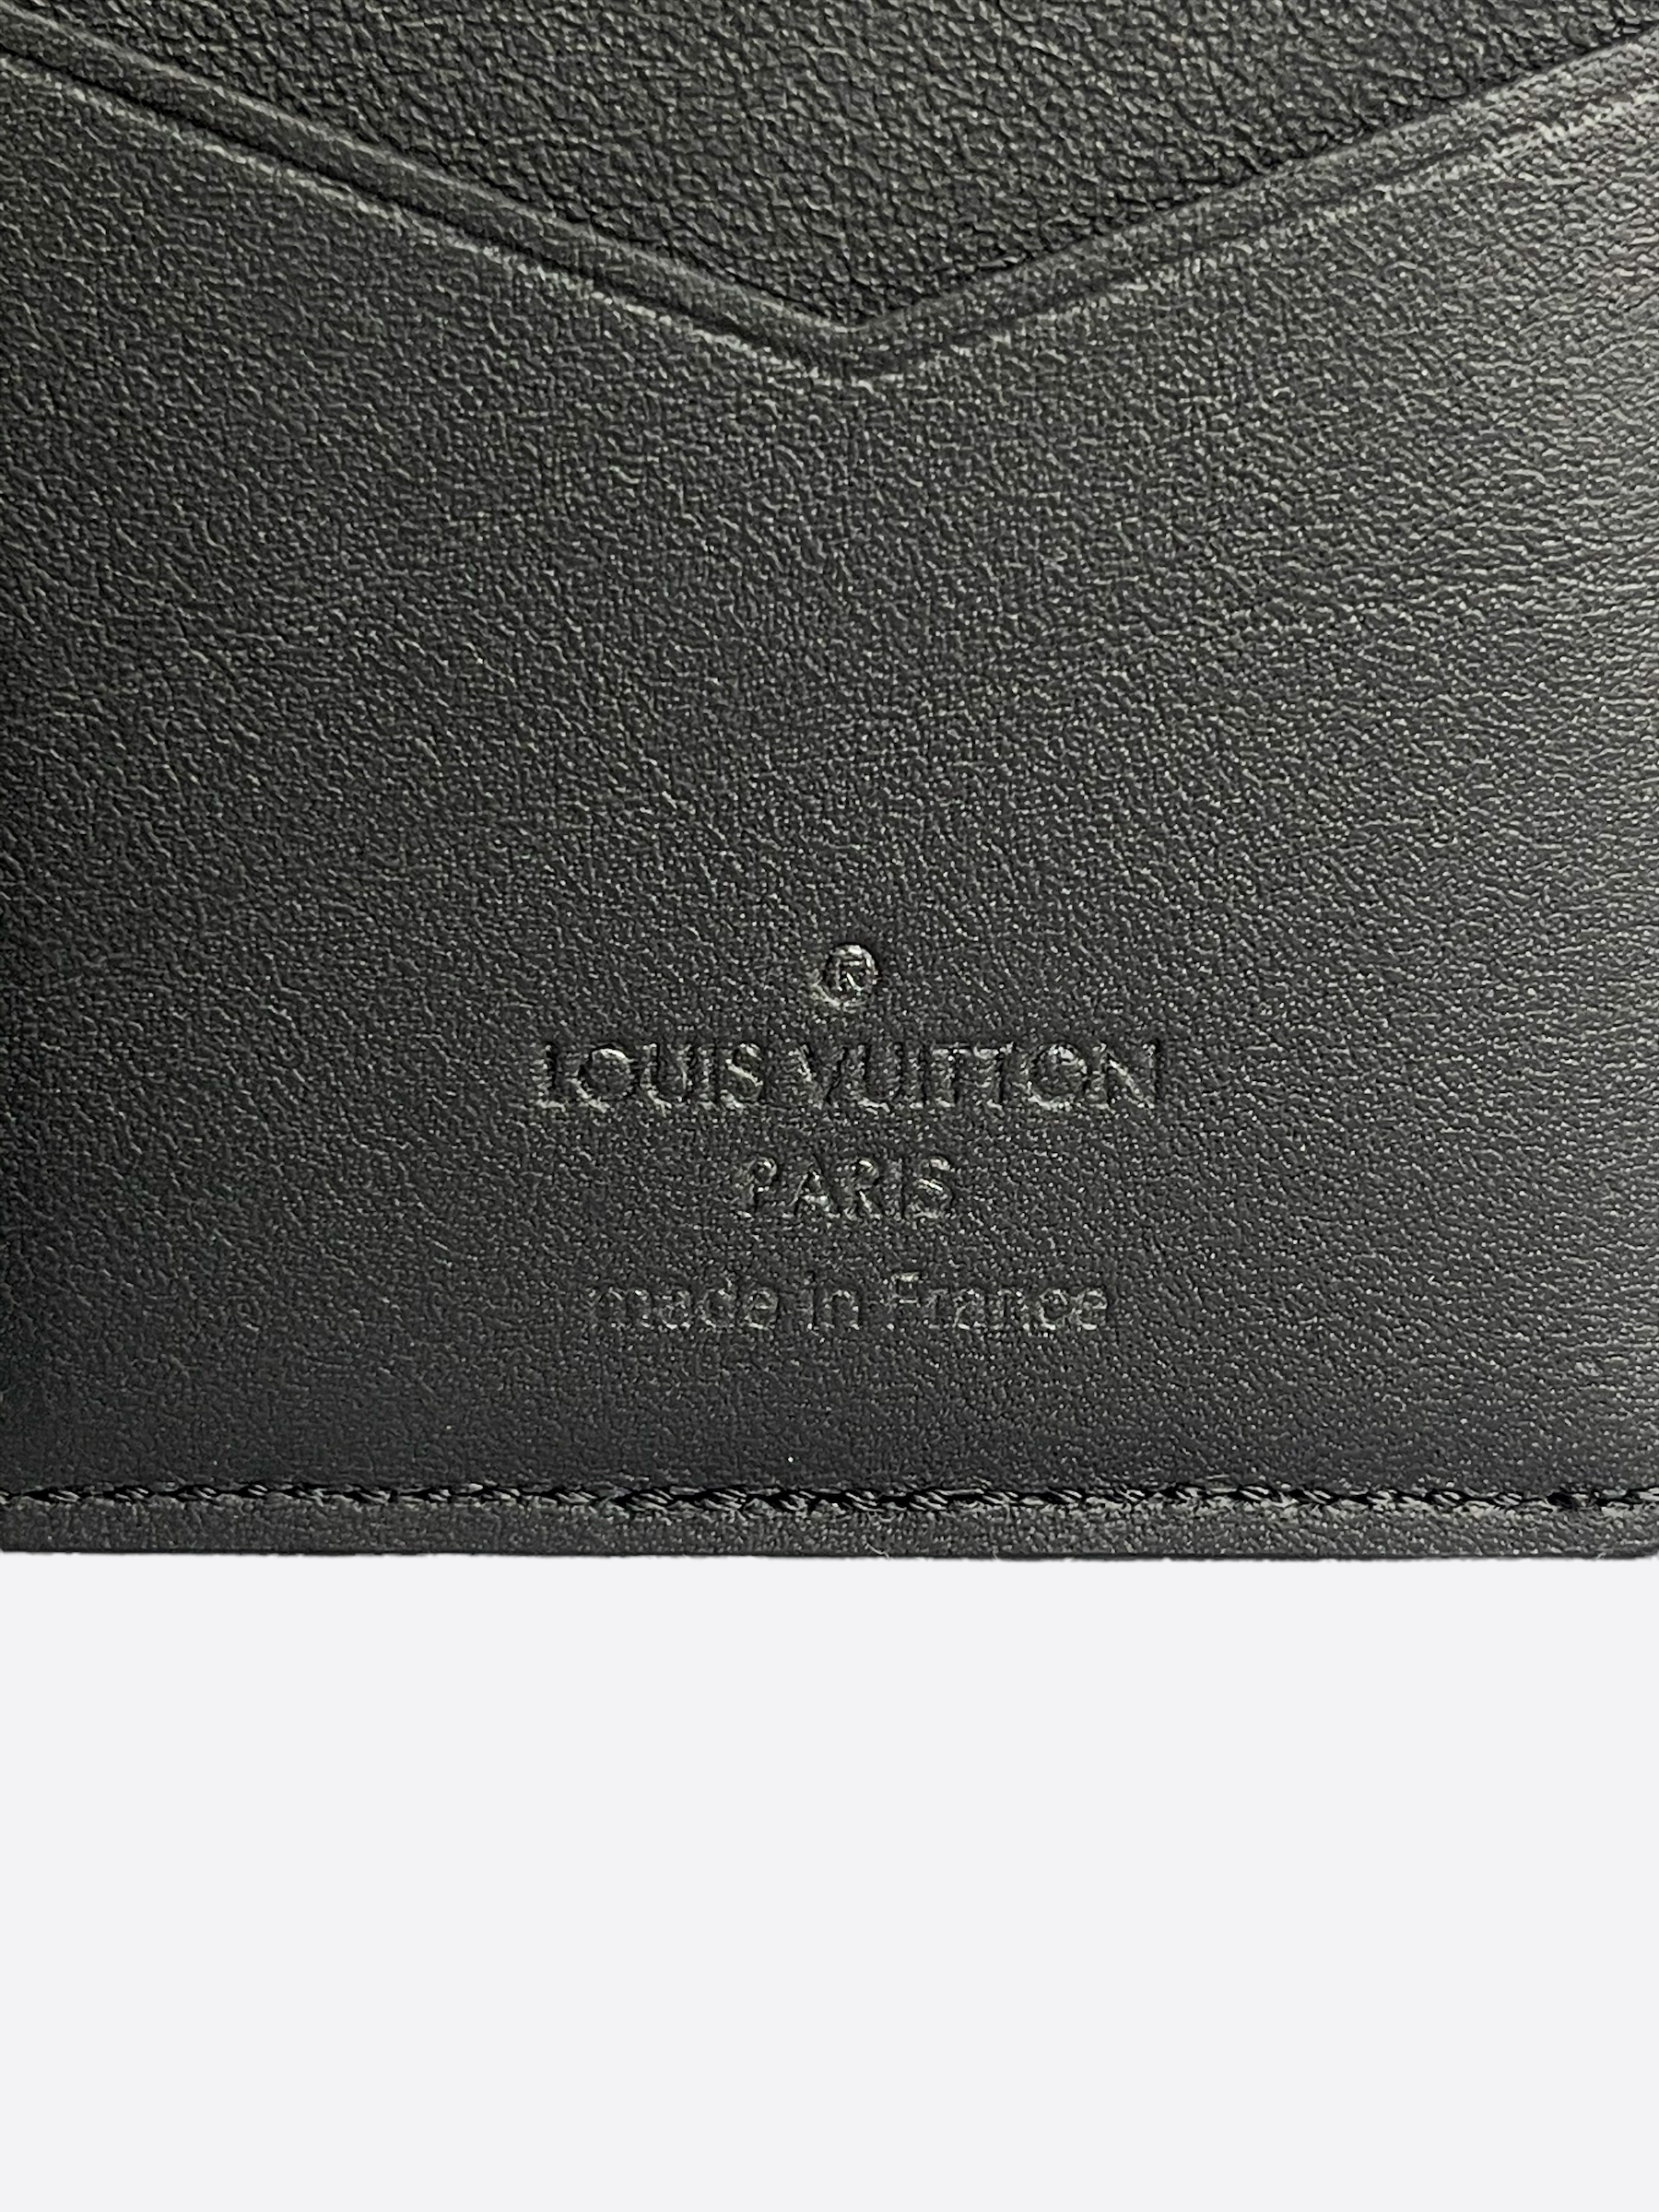 Louis Vuitton Taurillon Shadow Pocket Organizer in Taurillon Leather - US